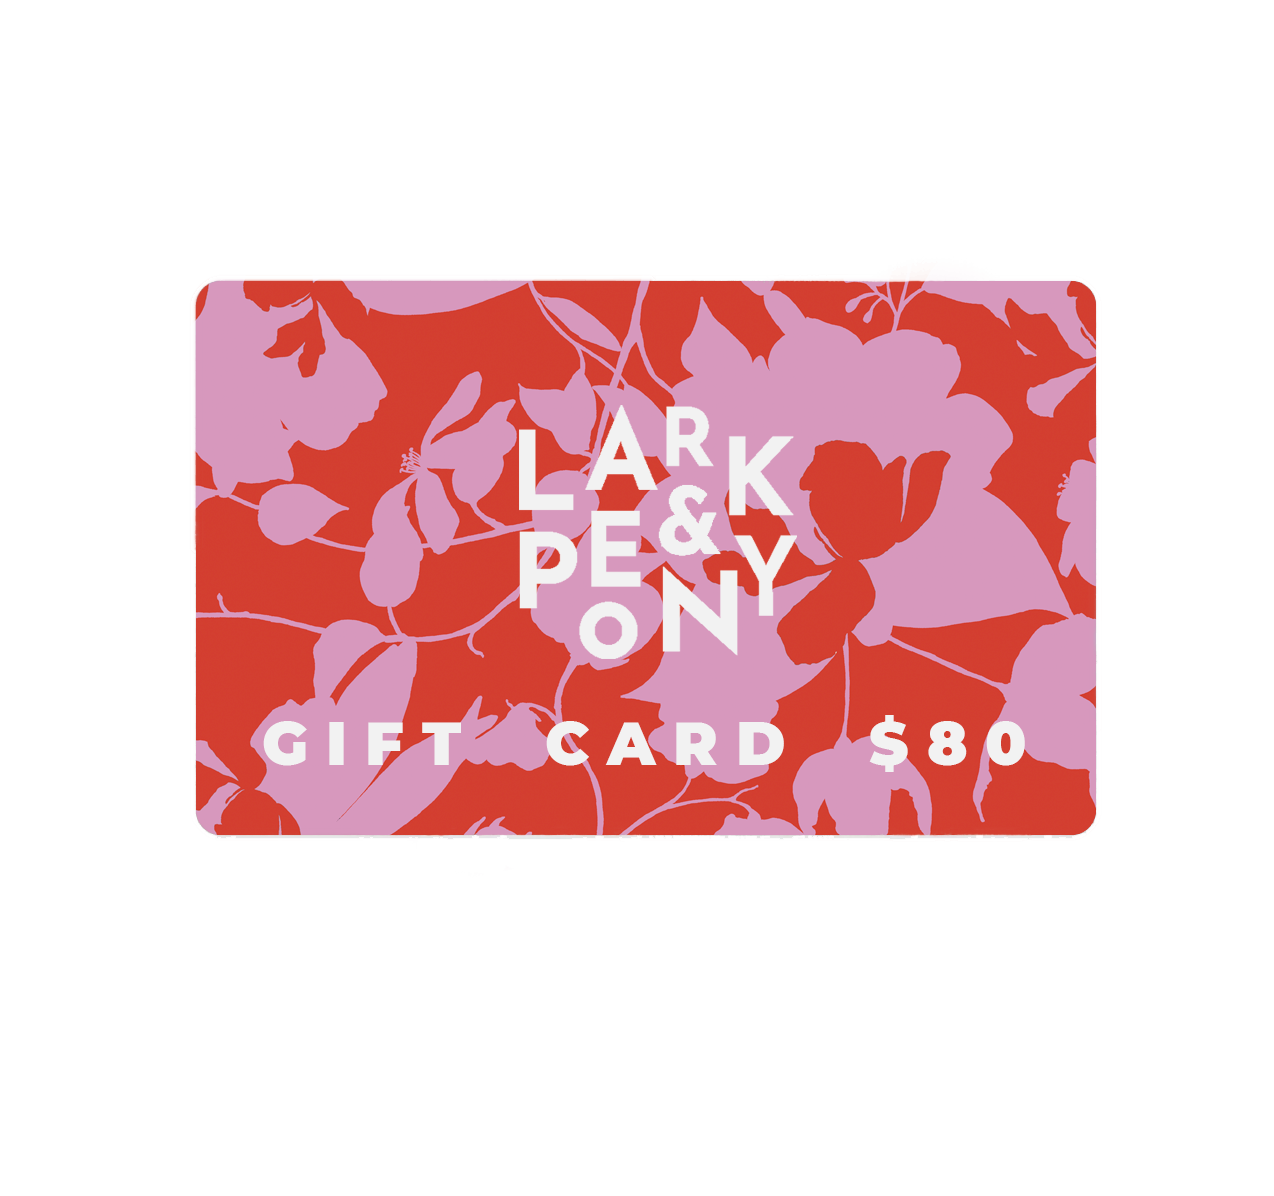 GIFT CARD - $80